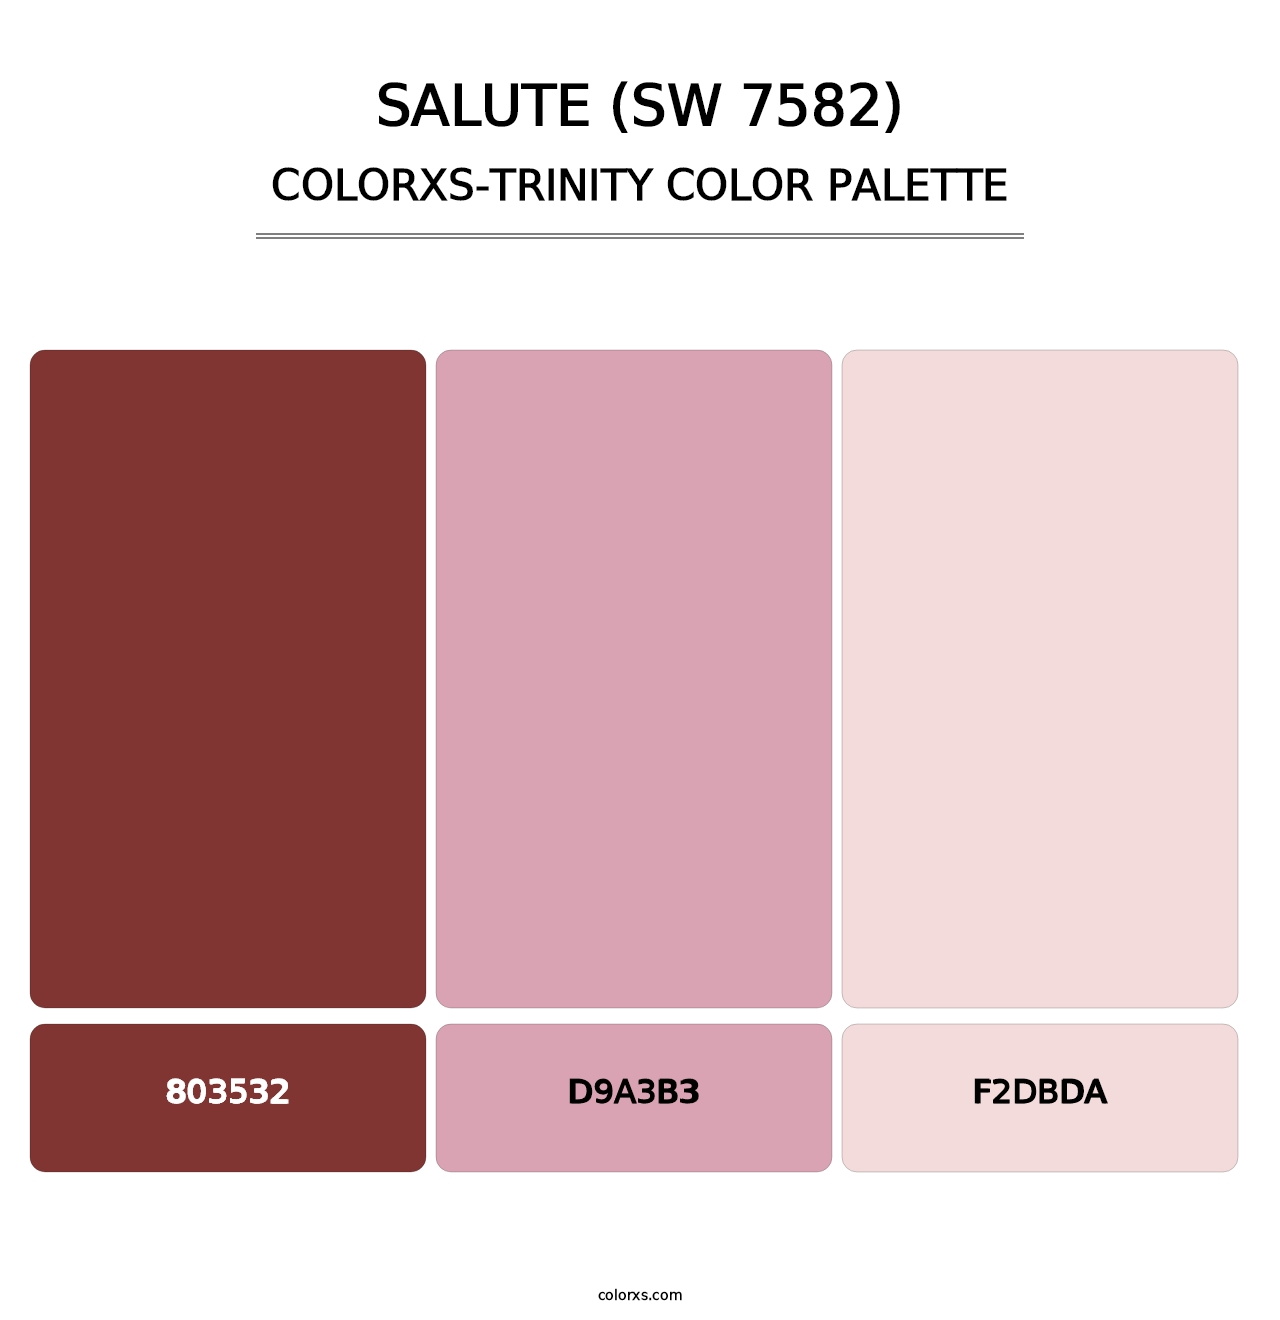 Salute (SW 7582) - Colorxs Trinity Palette